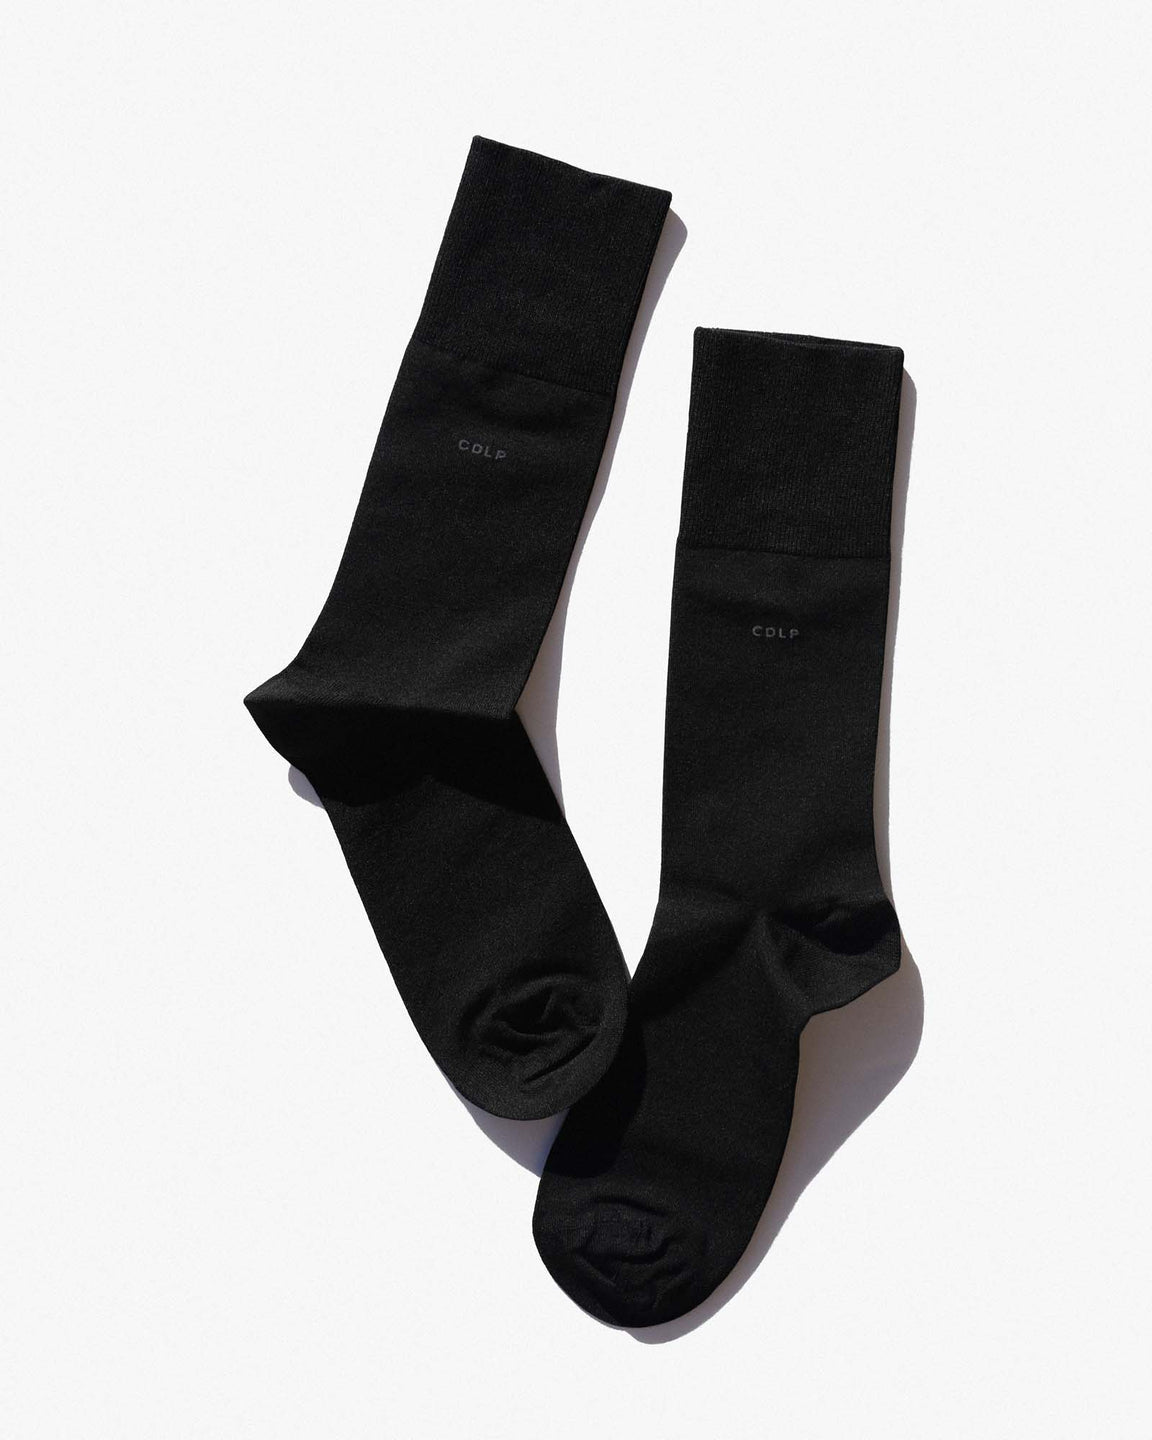 CDLP Mid Length Bamboo Socks in Black